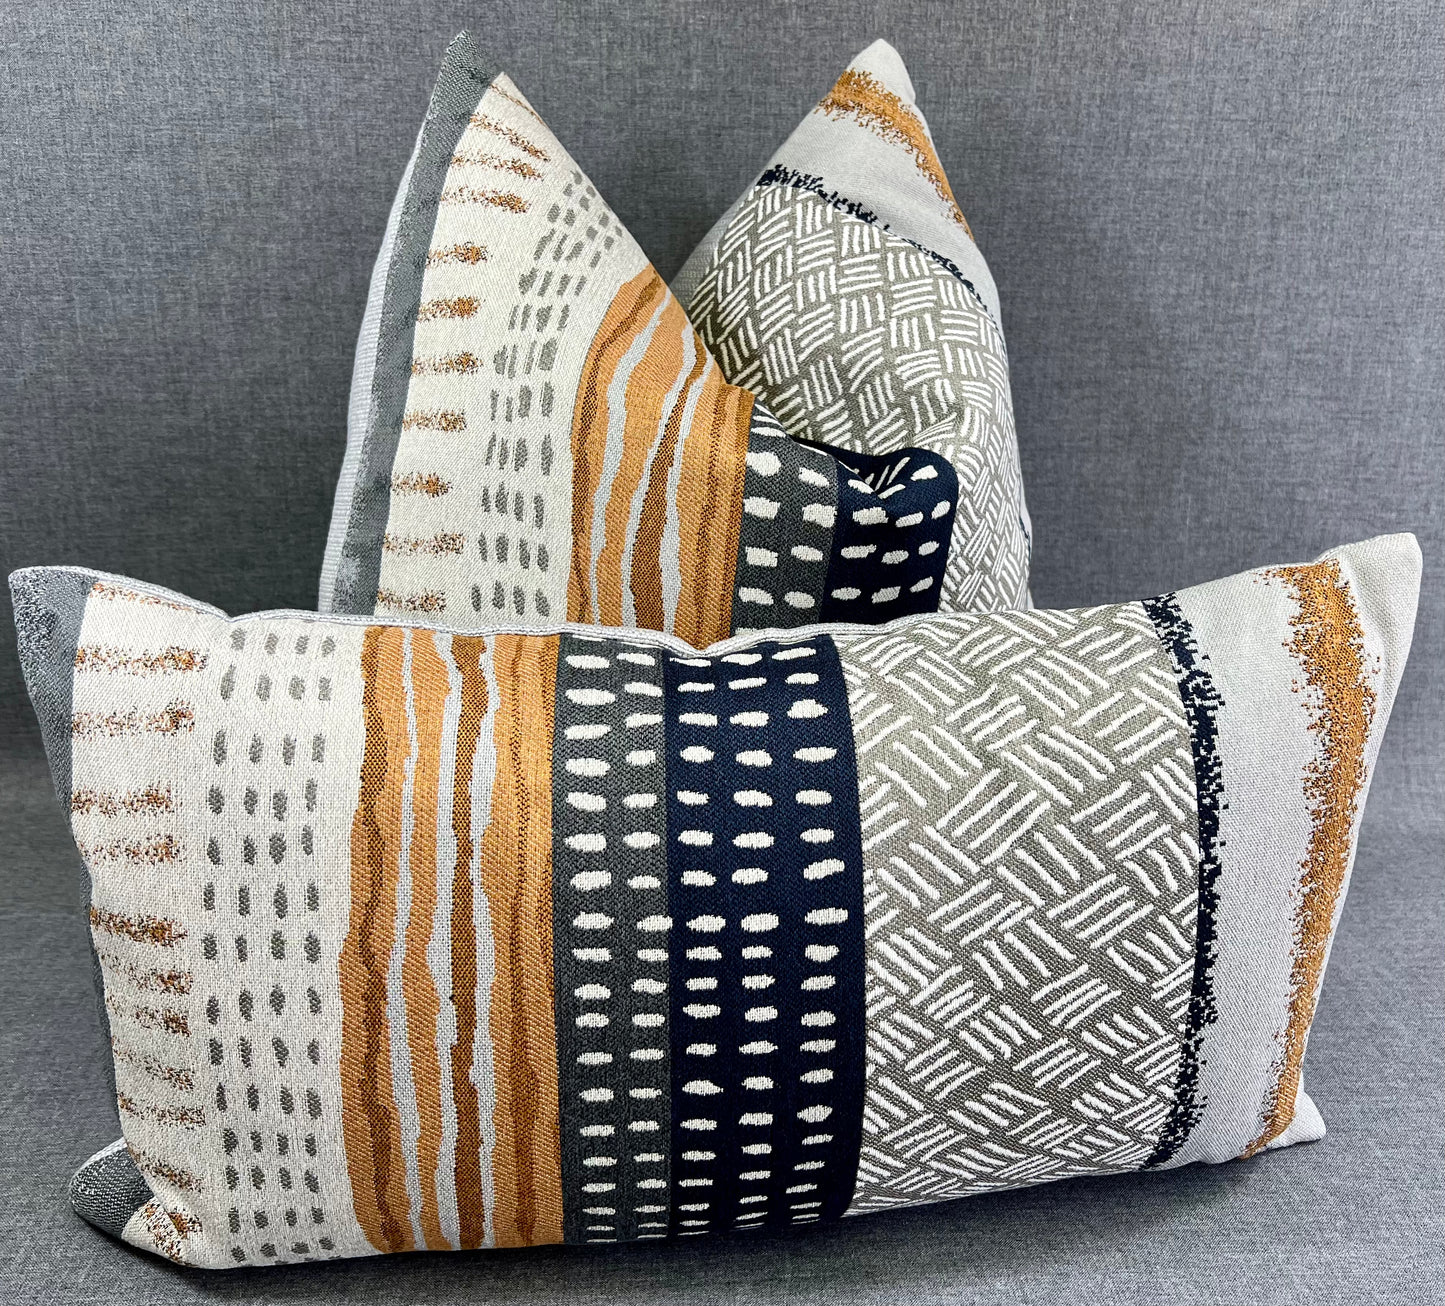 Luxury Lumbar Pillow - 24" x 14" - Tracks;  Woven ethnic / tribal detail on a grey base